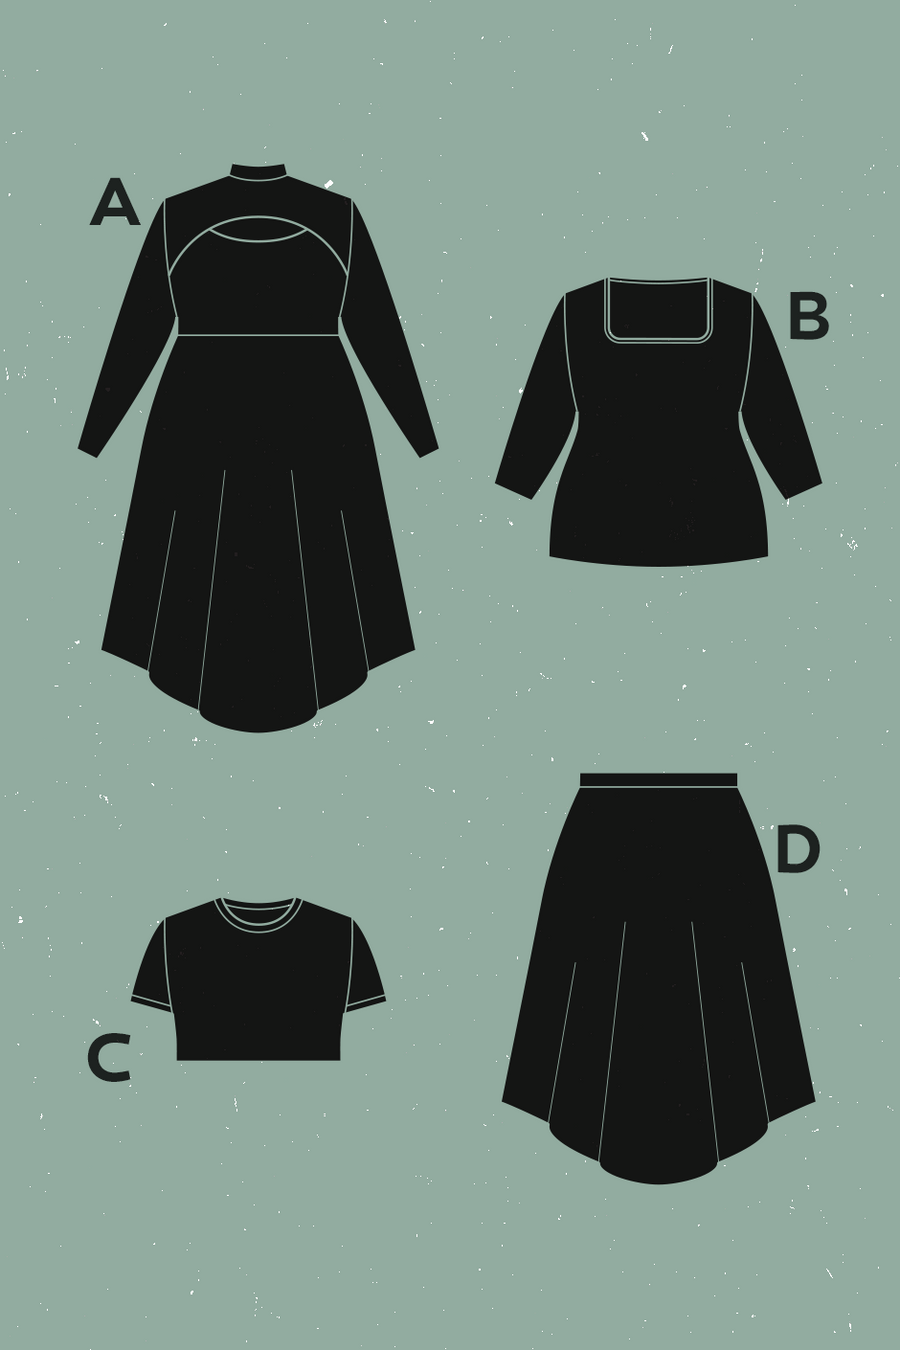 Orage Dress, Top + Skirt Pattern | Patron de Robe, Haut + Jupe Orage | Deer & Doe